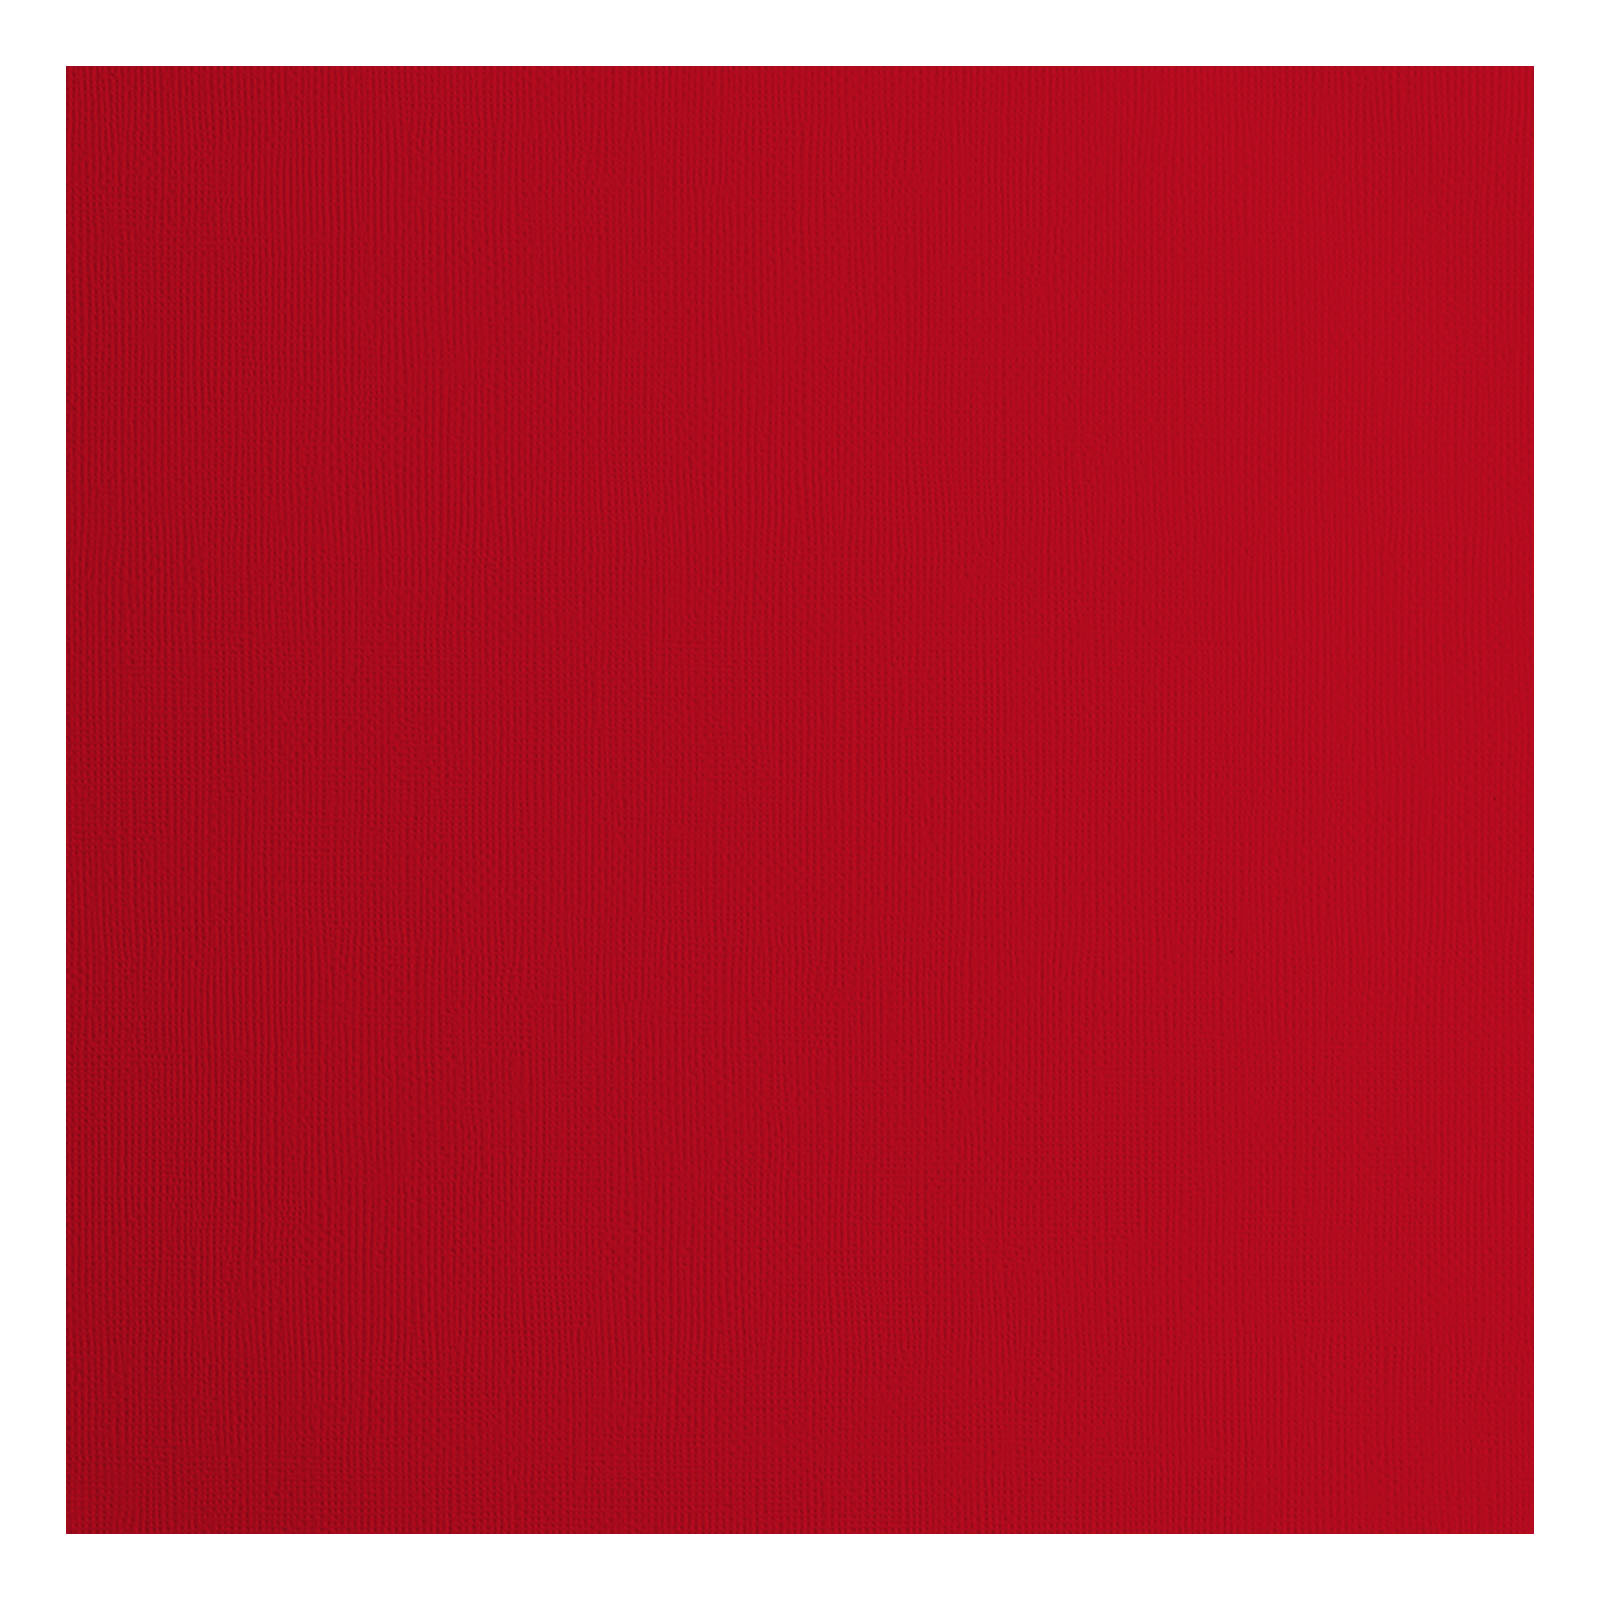 Florence • Cartoncino 216g Testurizzata Rosso